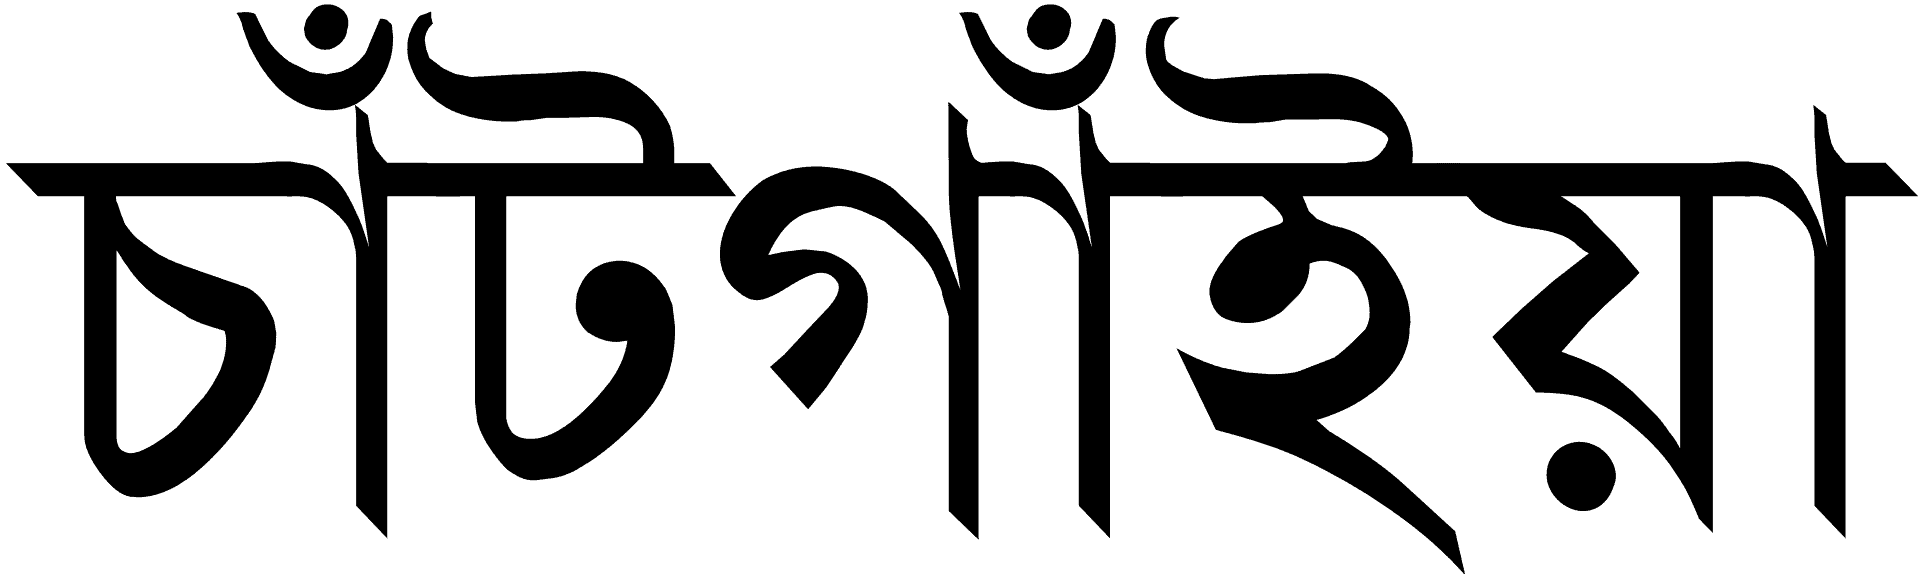 Chittagonian चटगाँवी भाषा